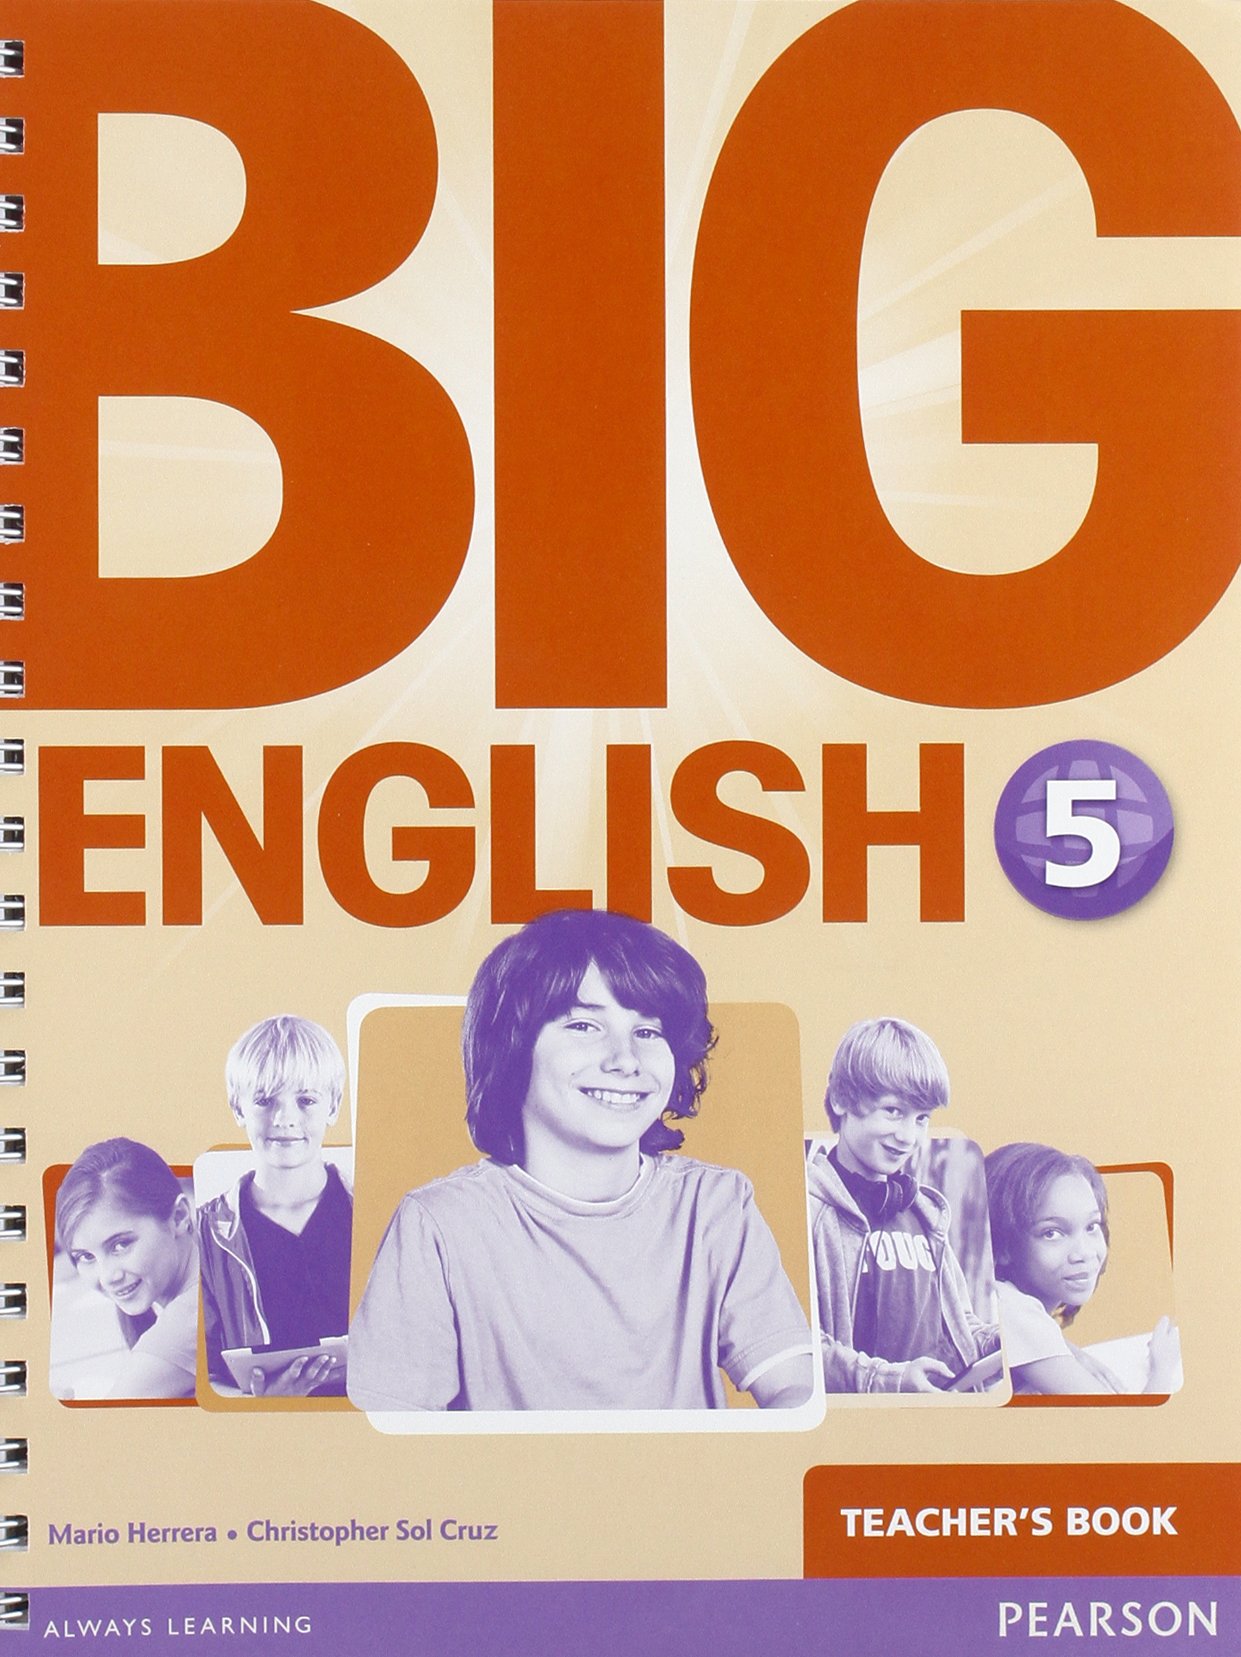 BIG ENGLISH 5 Teacher's Book